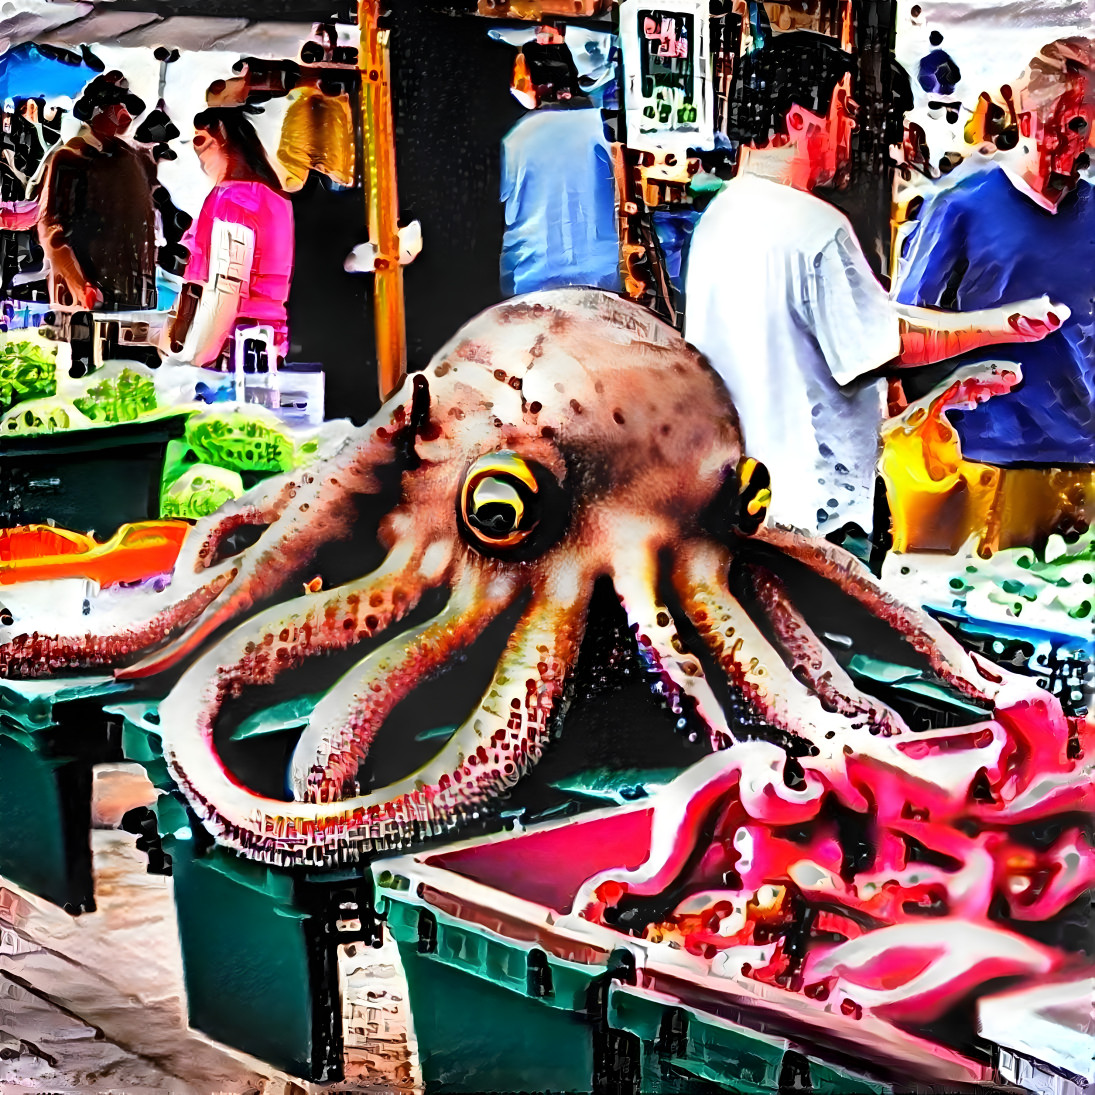 urban octopus shops the farmers' market